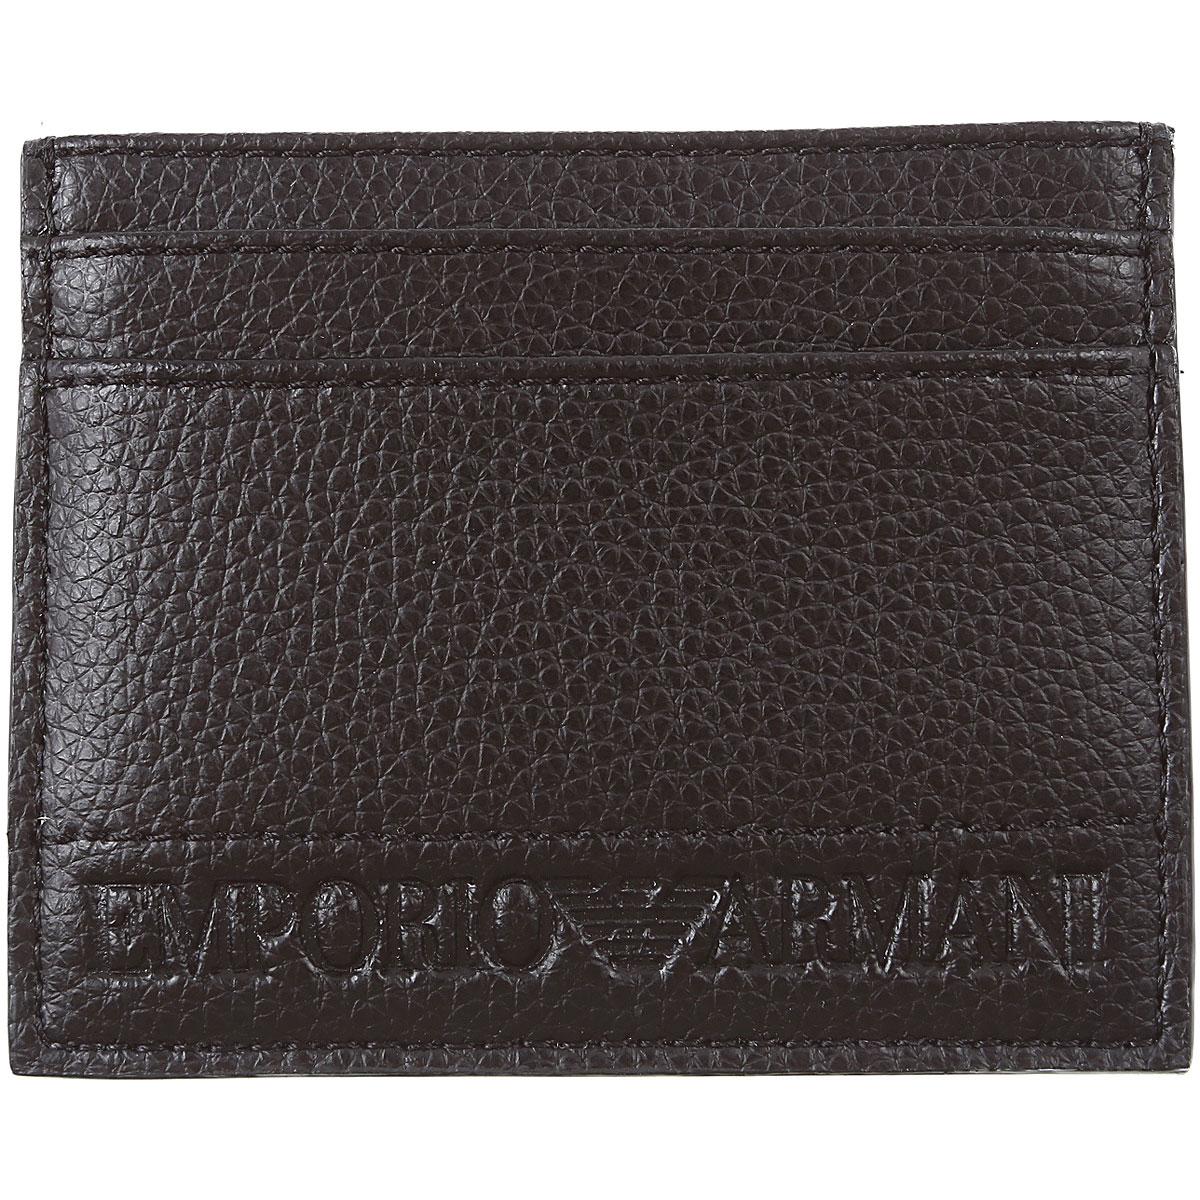 Emporio Armani Card Holder For Men in Black for Men - Lyst